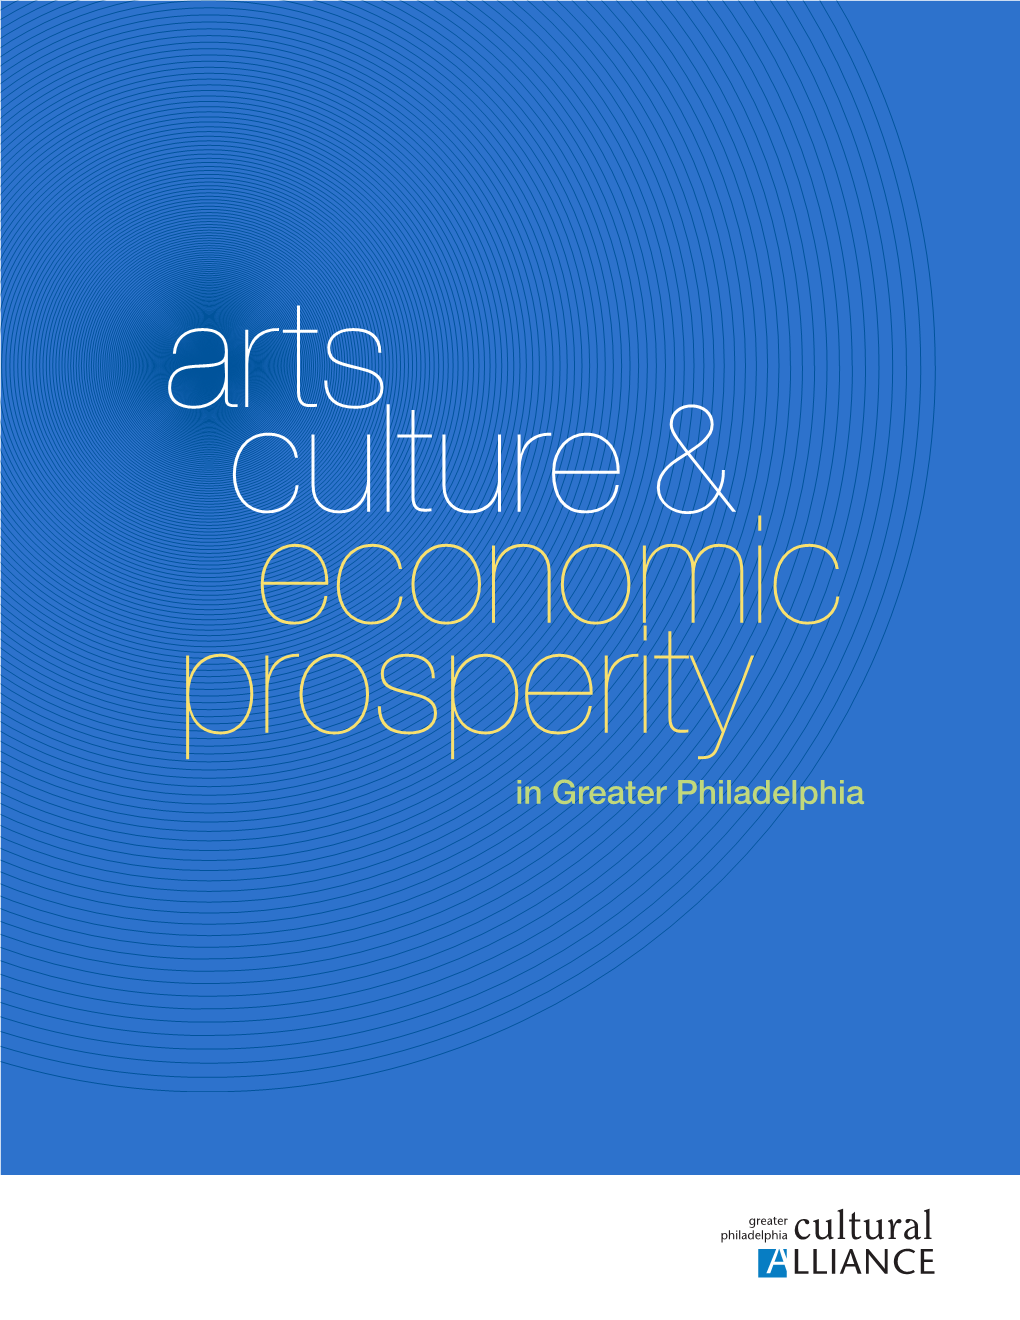 Arts, Culture, and Economic Prosperity in Greater Philadelphia